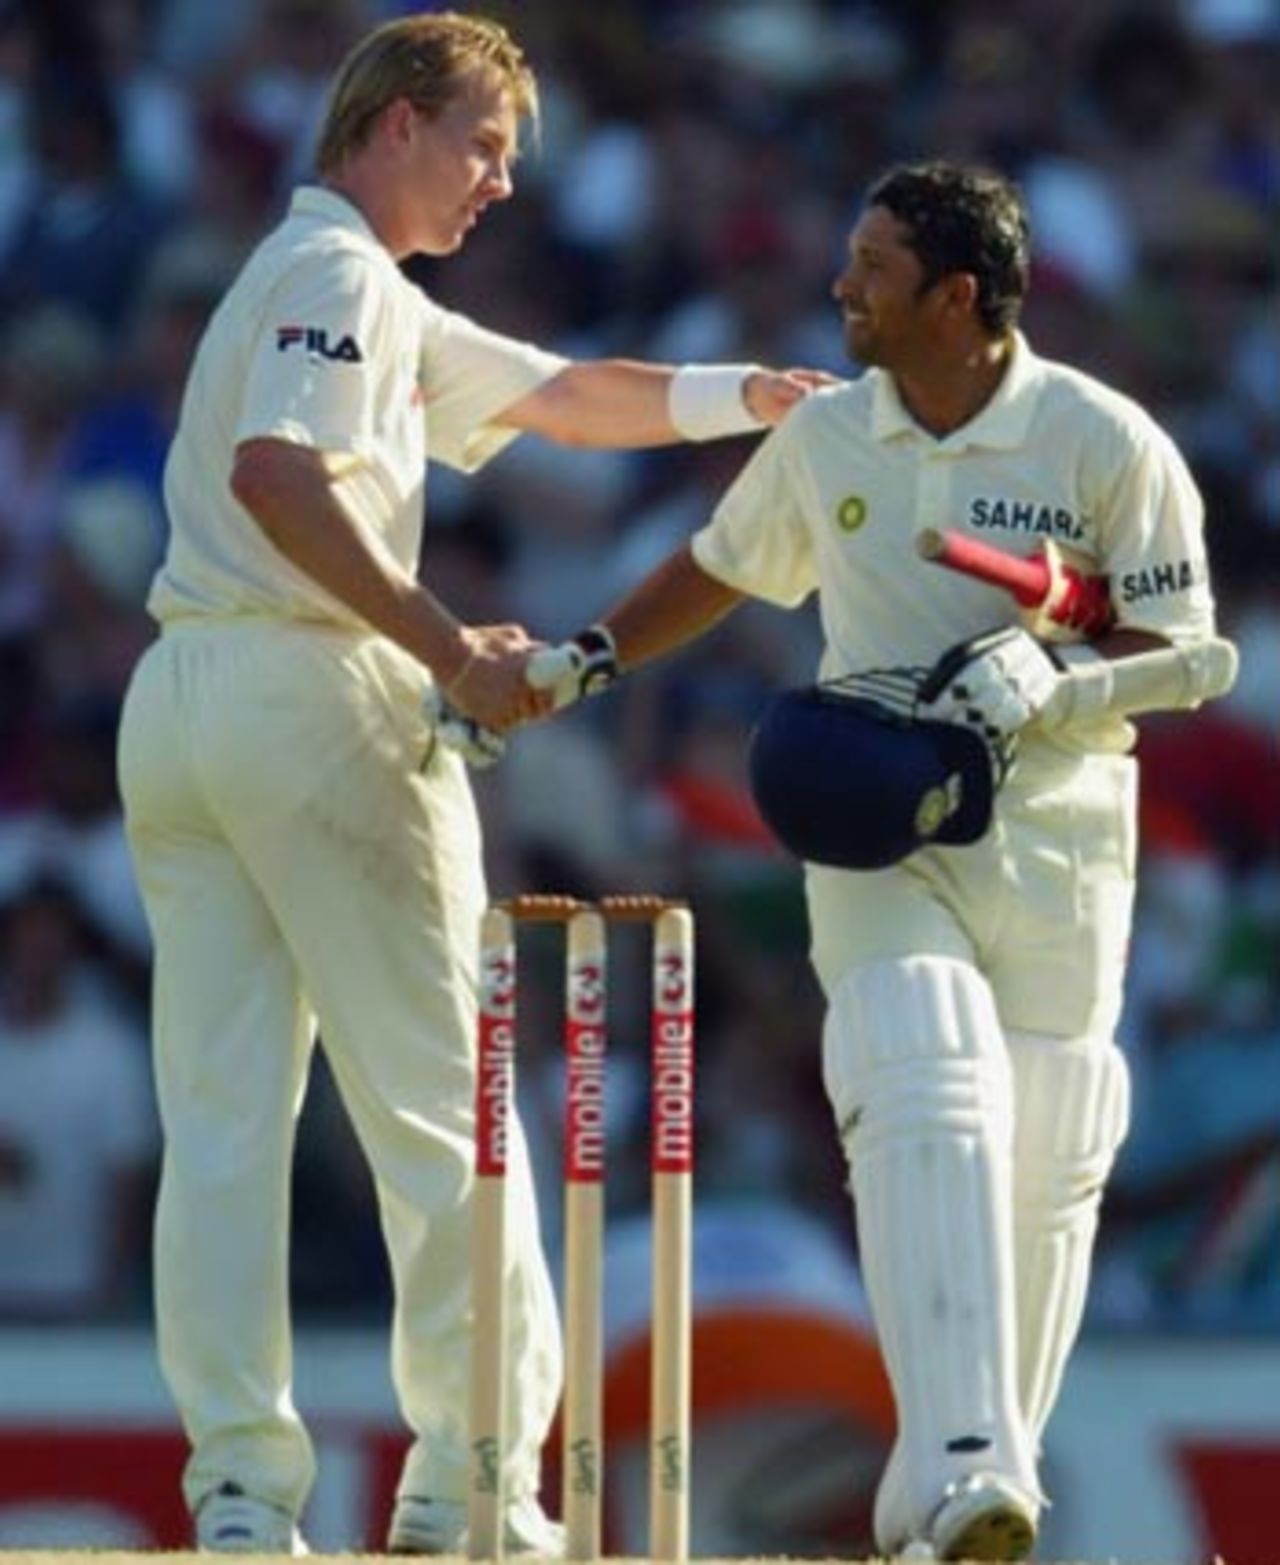 A pat on the back from Brett Lee to Sachin Tendulkar, Australia v India, 4th Test, Sydney, 2nd day, January 3, 2004